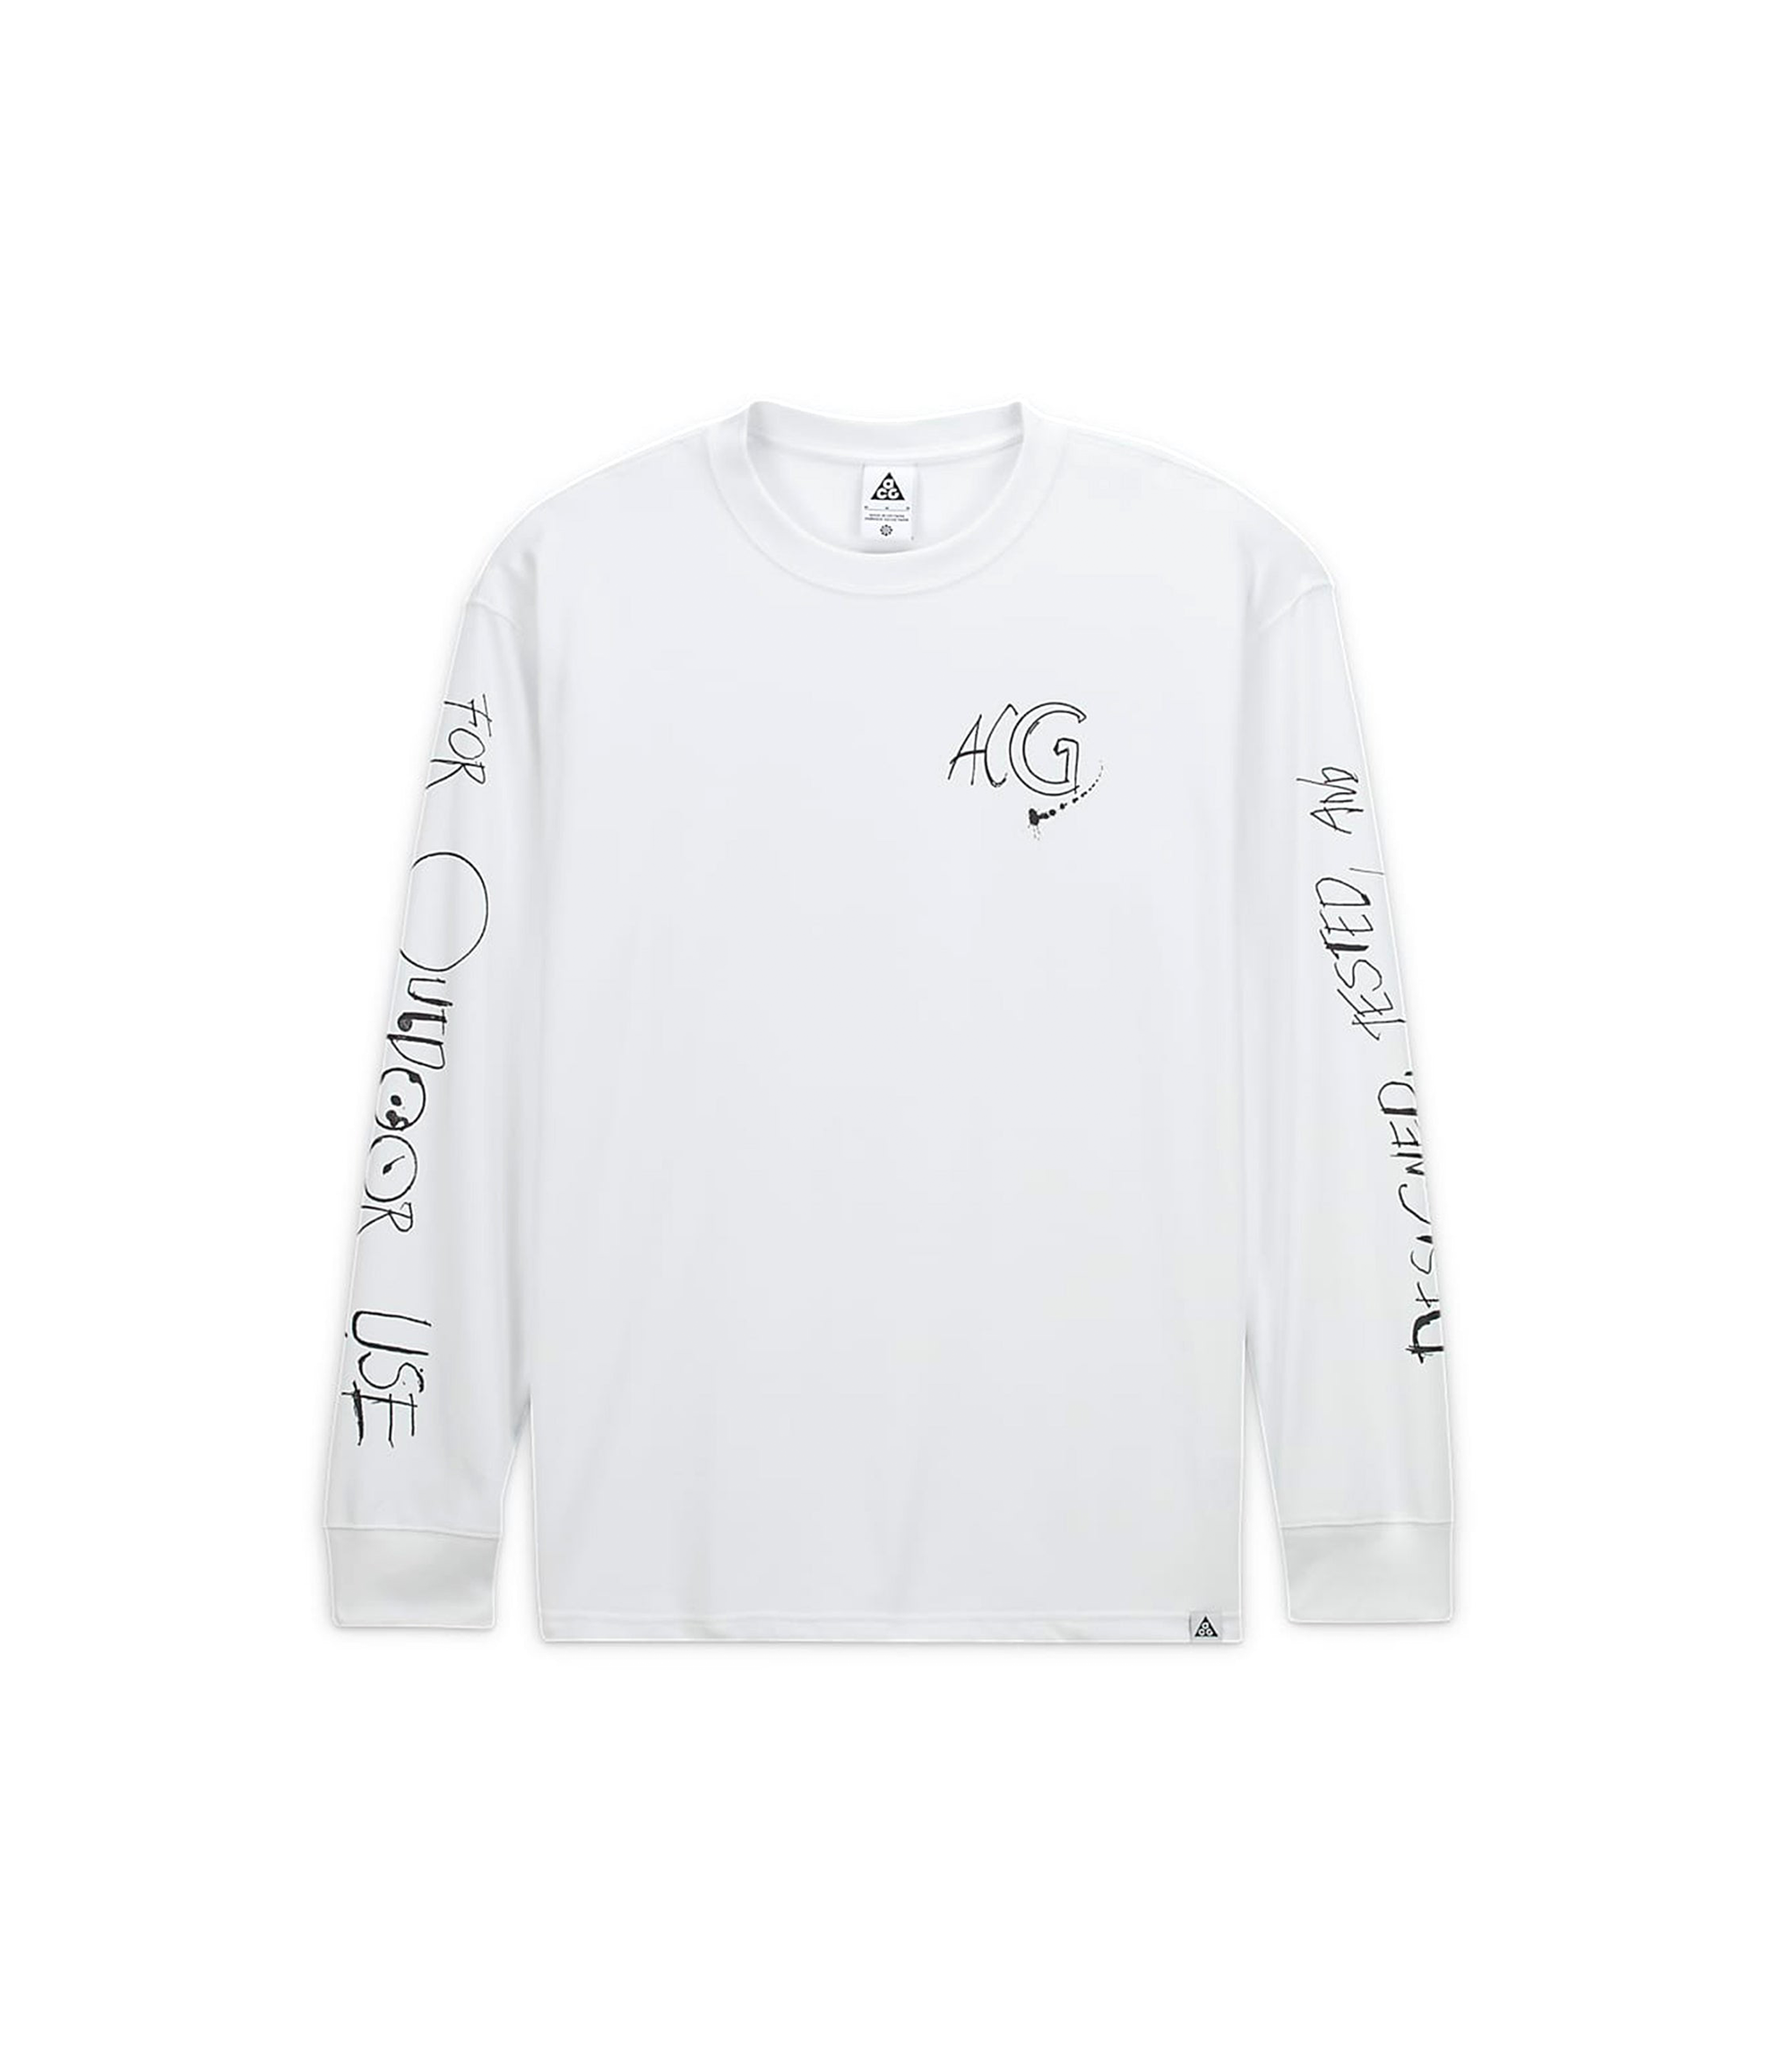 RS2 L/S T-shirt - Summit White / Black